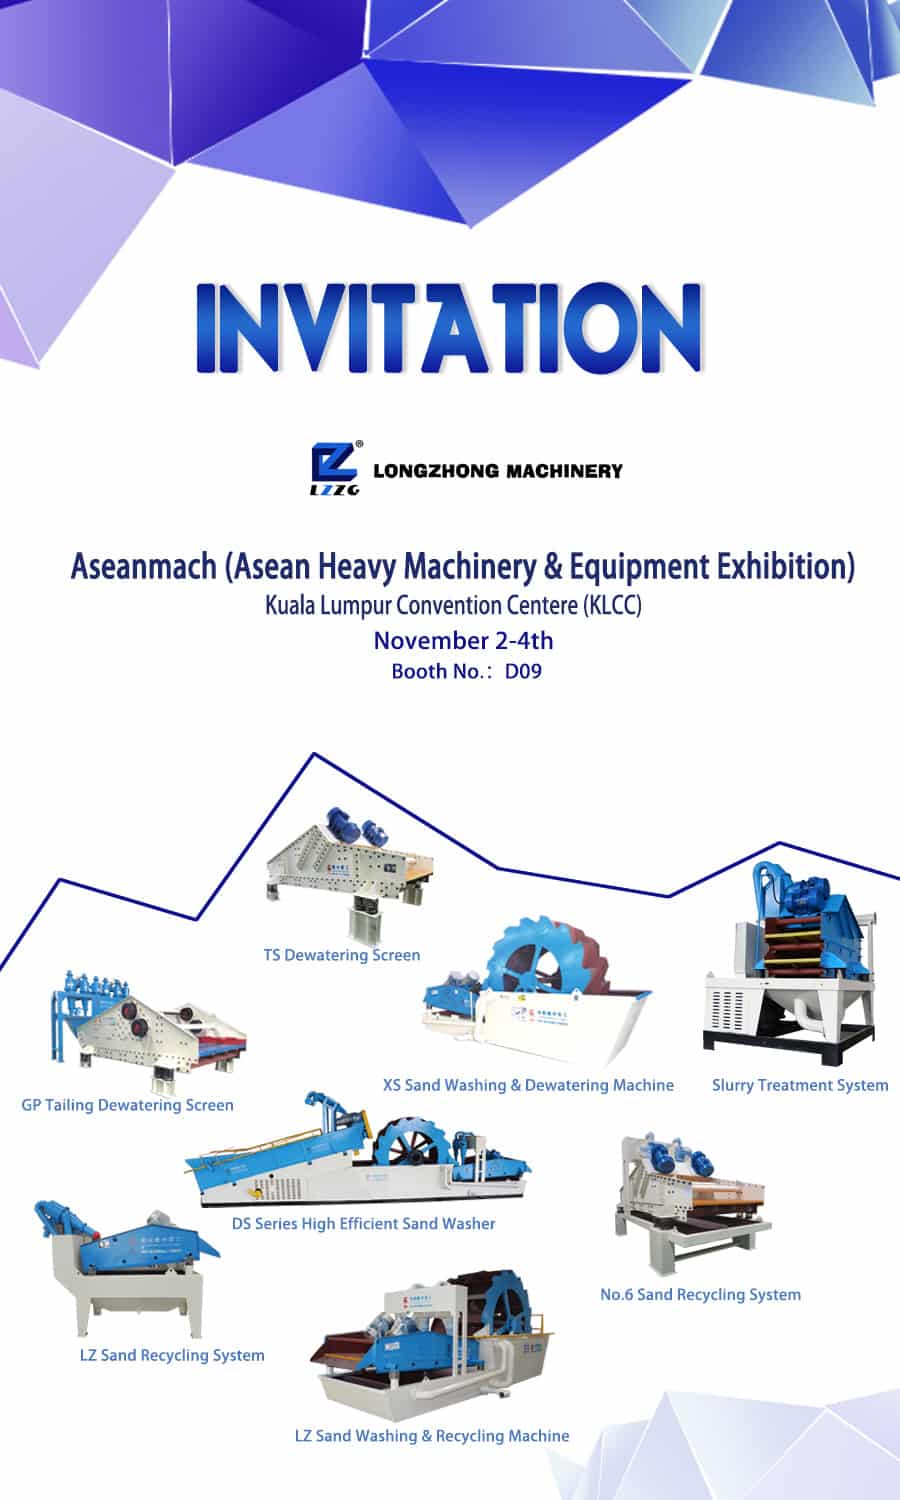 Aseanmach (Asean Heavy Machinery & Equipment Exhibition) will be held tomorrow.